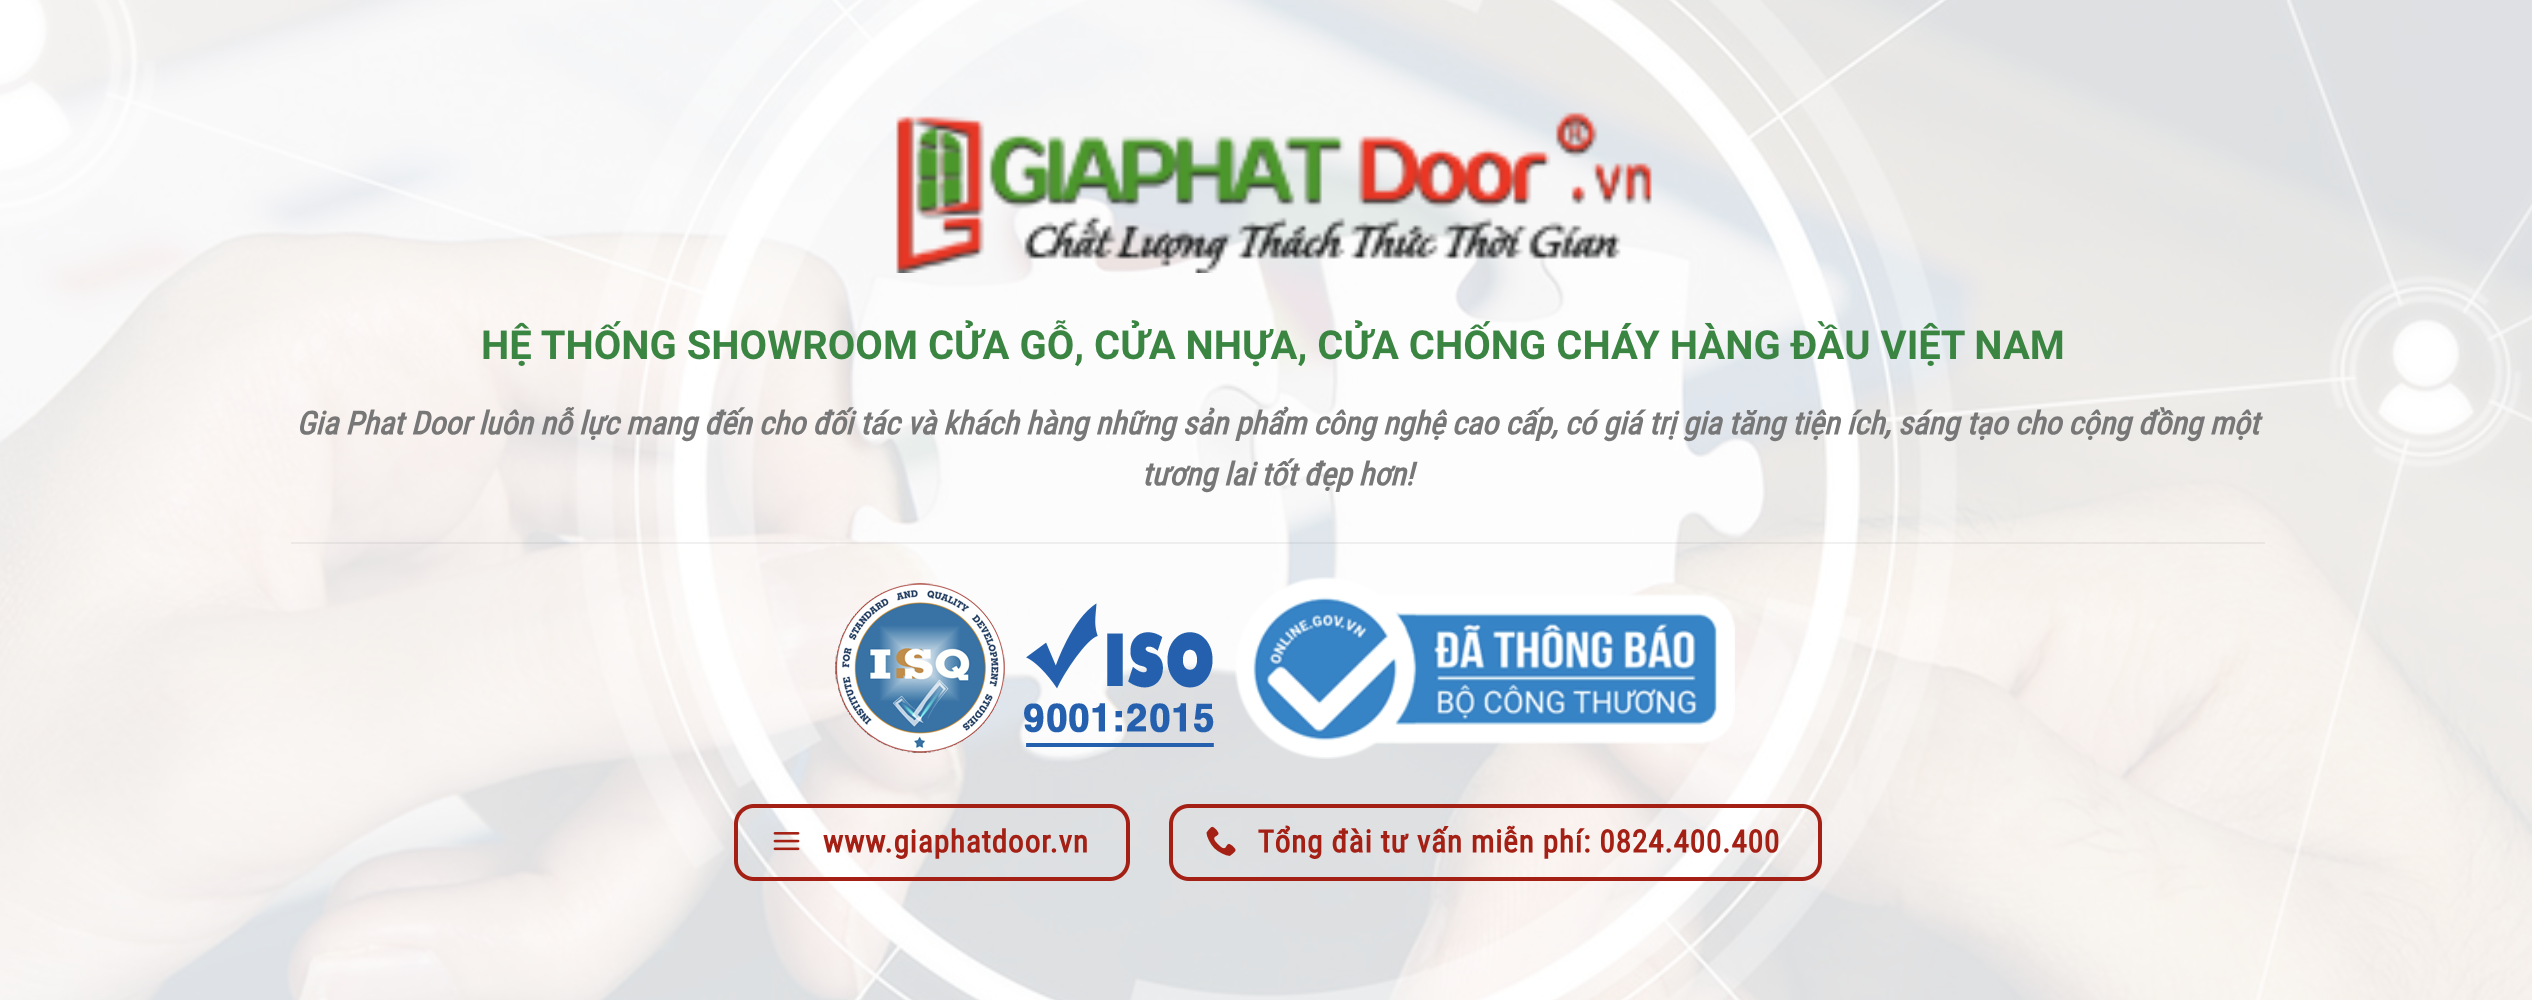 Gia Phát Door Cover Image